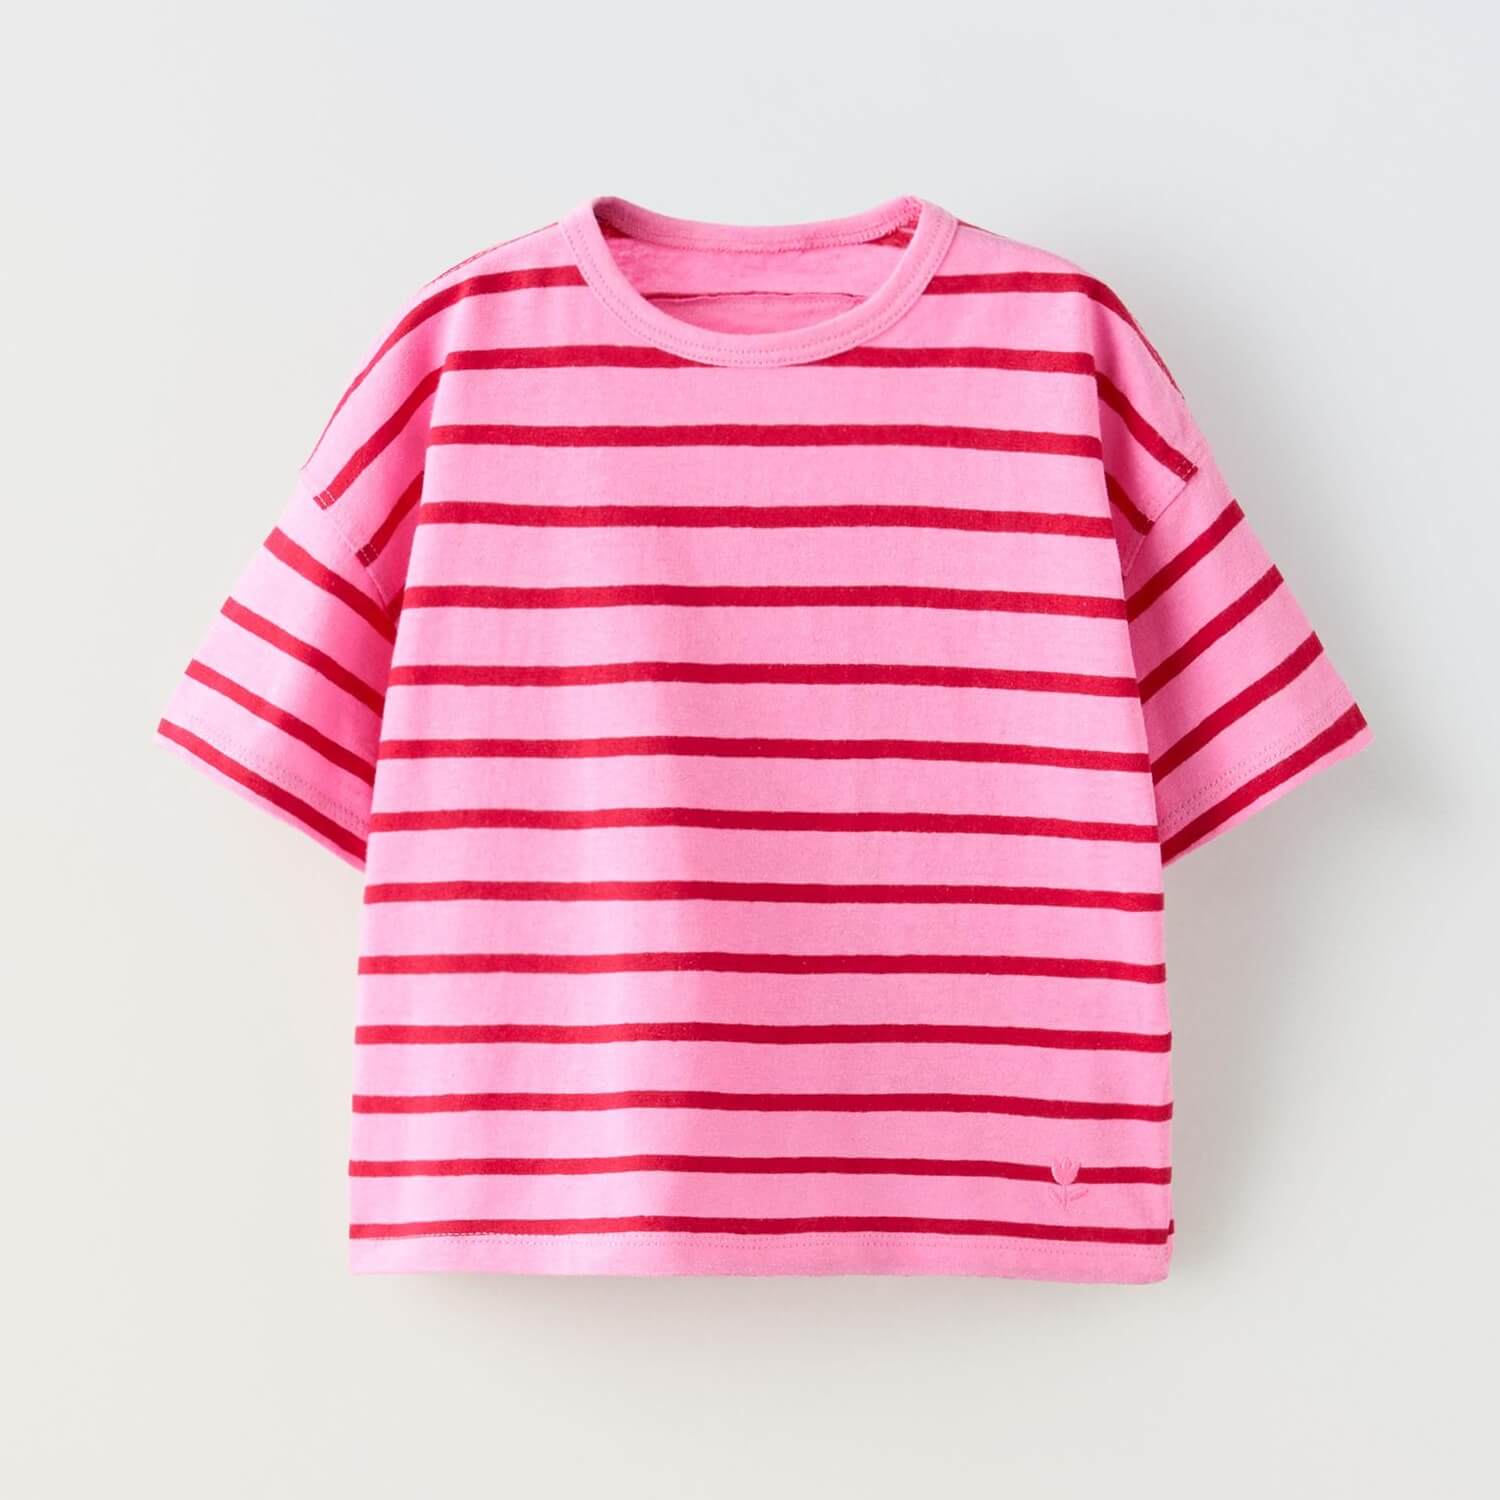 Футболка Zara Woven Striped With Embroidery, темно-розовый футболка zara striped with patch белый черный